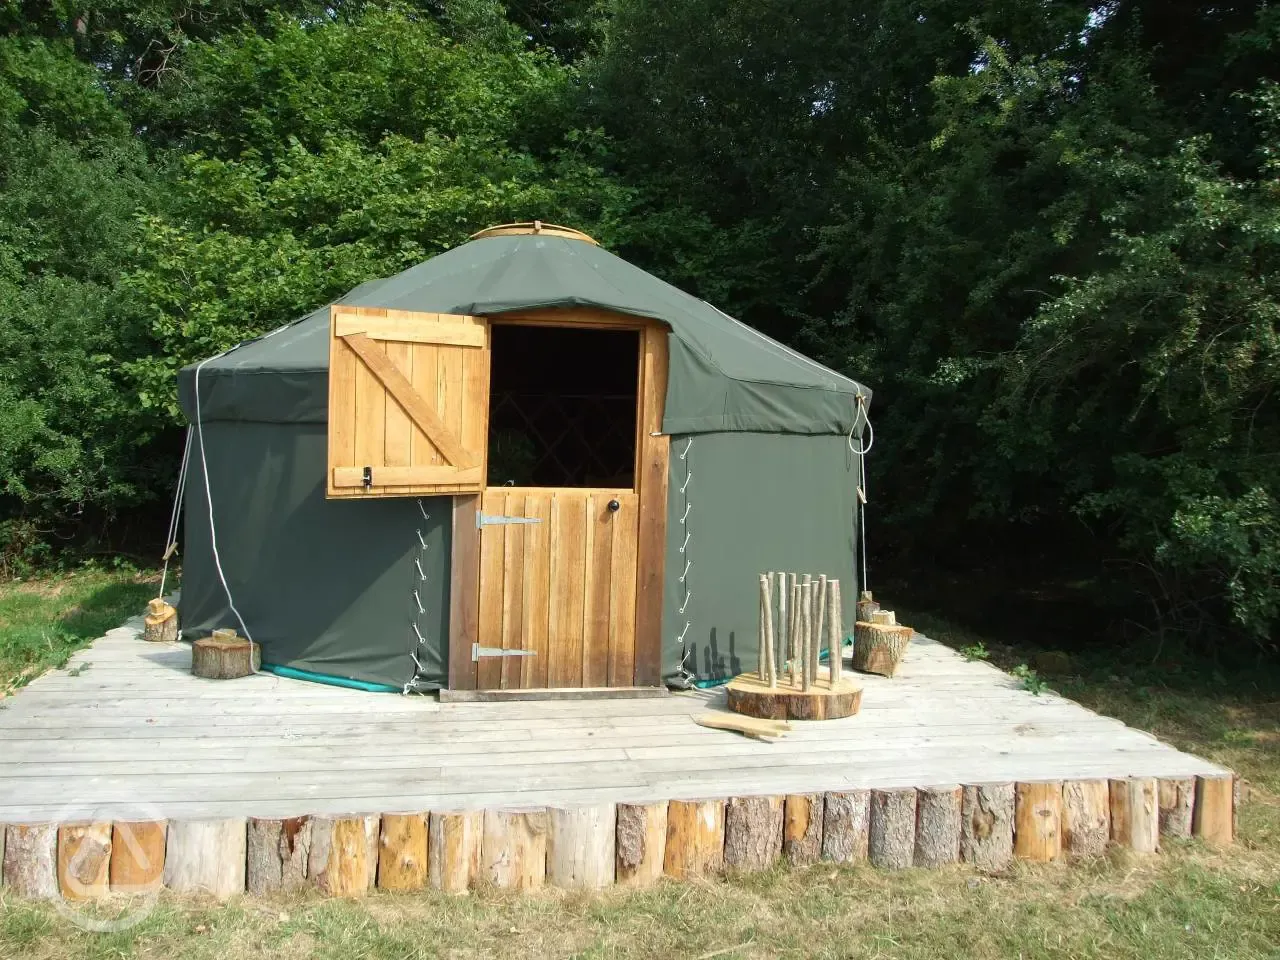 Smaller sizer yurt at night pastures